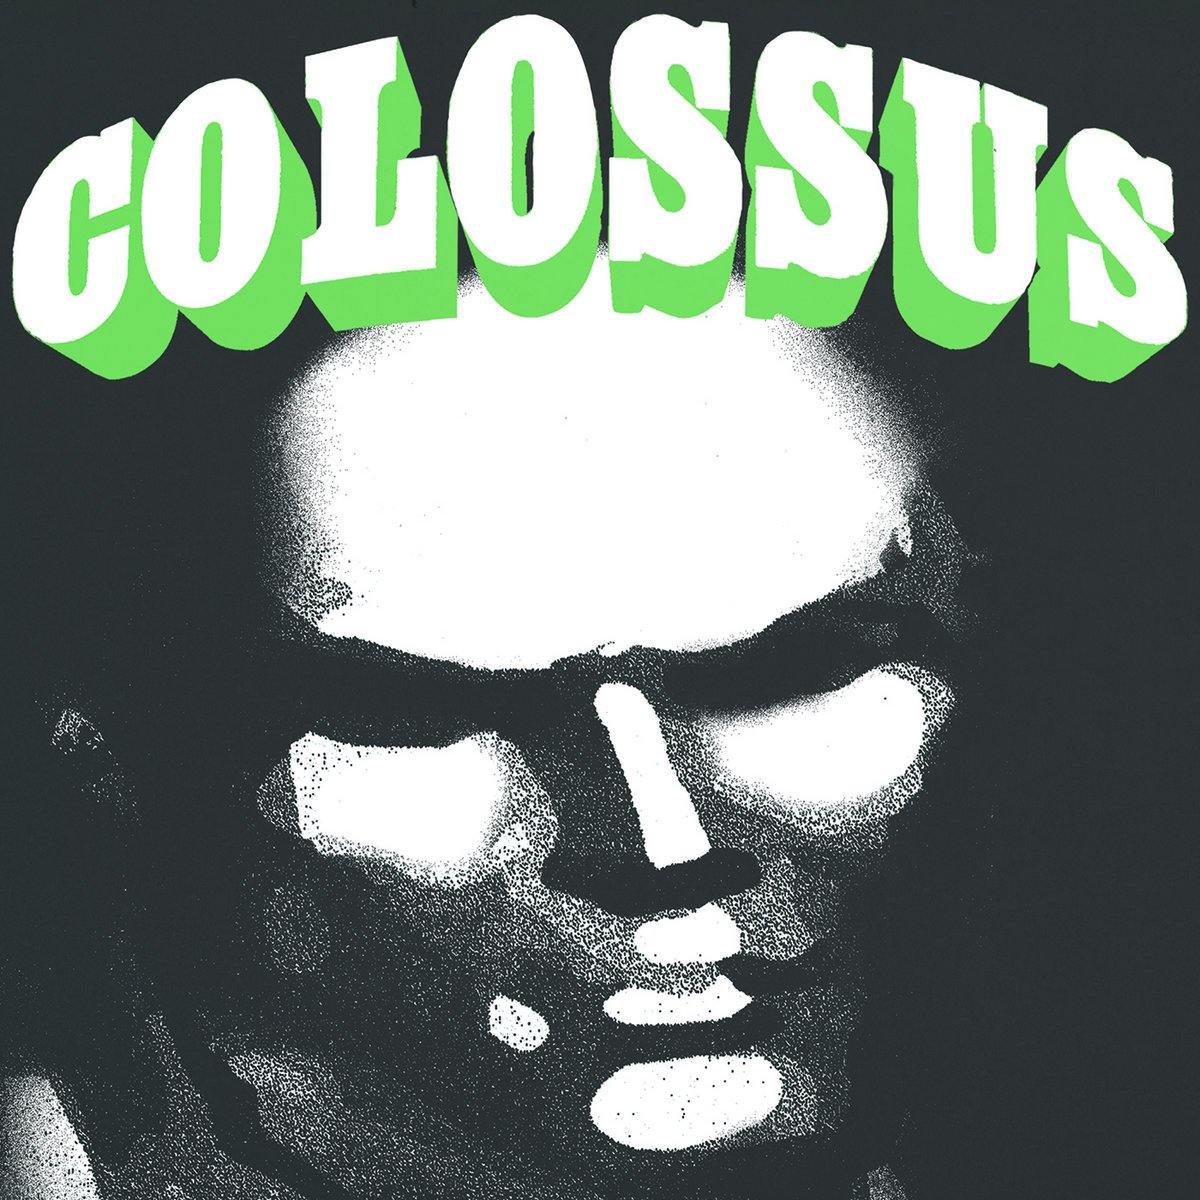 Buy – Colossus "Colossus" 7" – Band & Music Merch – Cold Cuts Merch